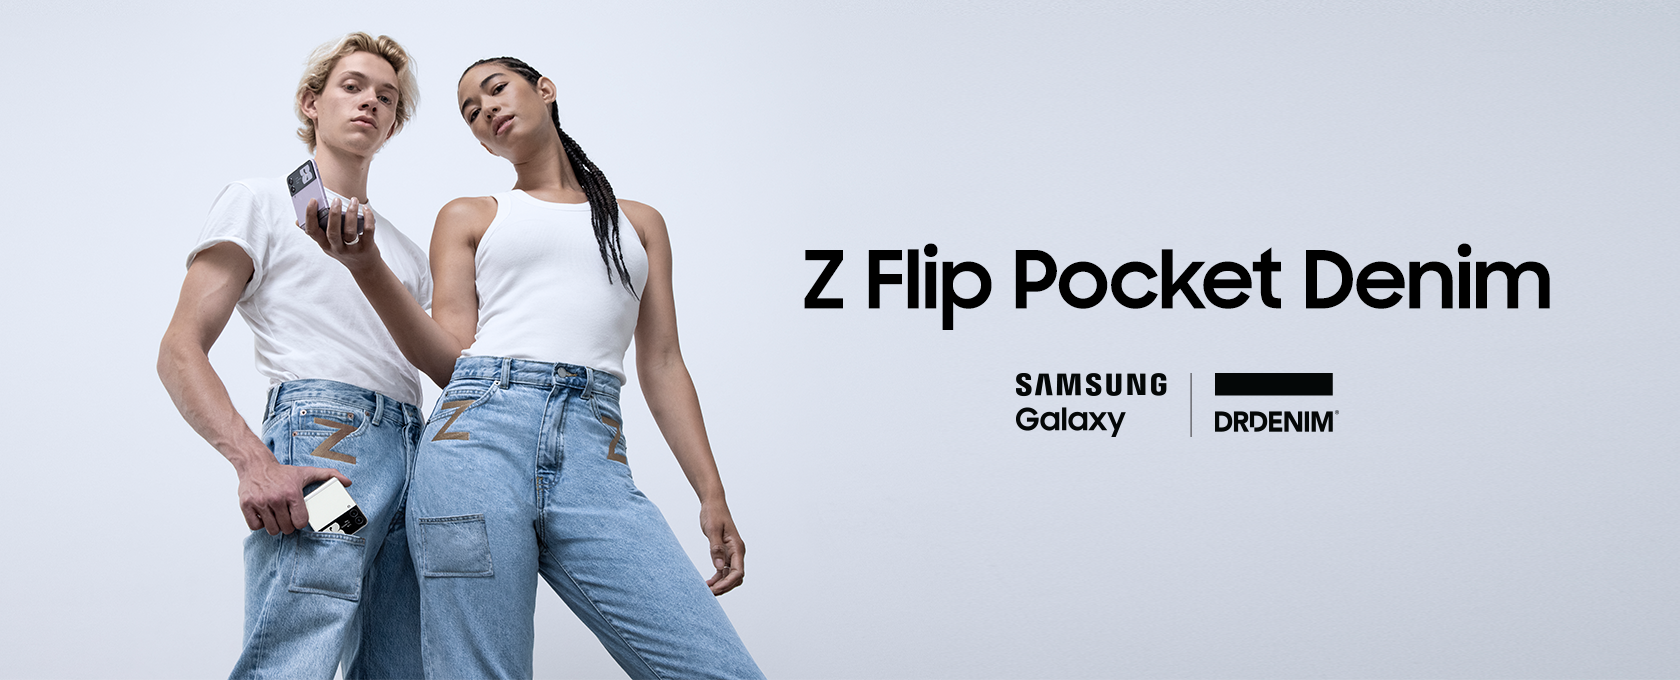 Samsung x DrDenim Z Flip Pocket Denim